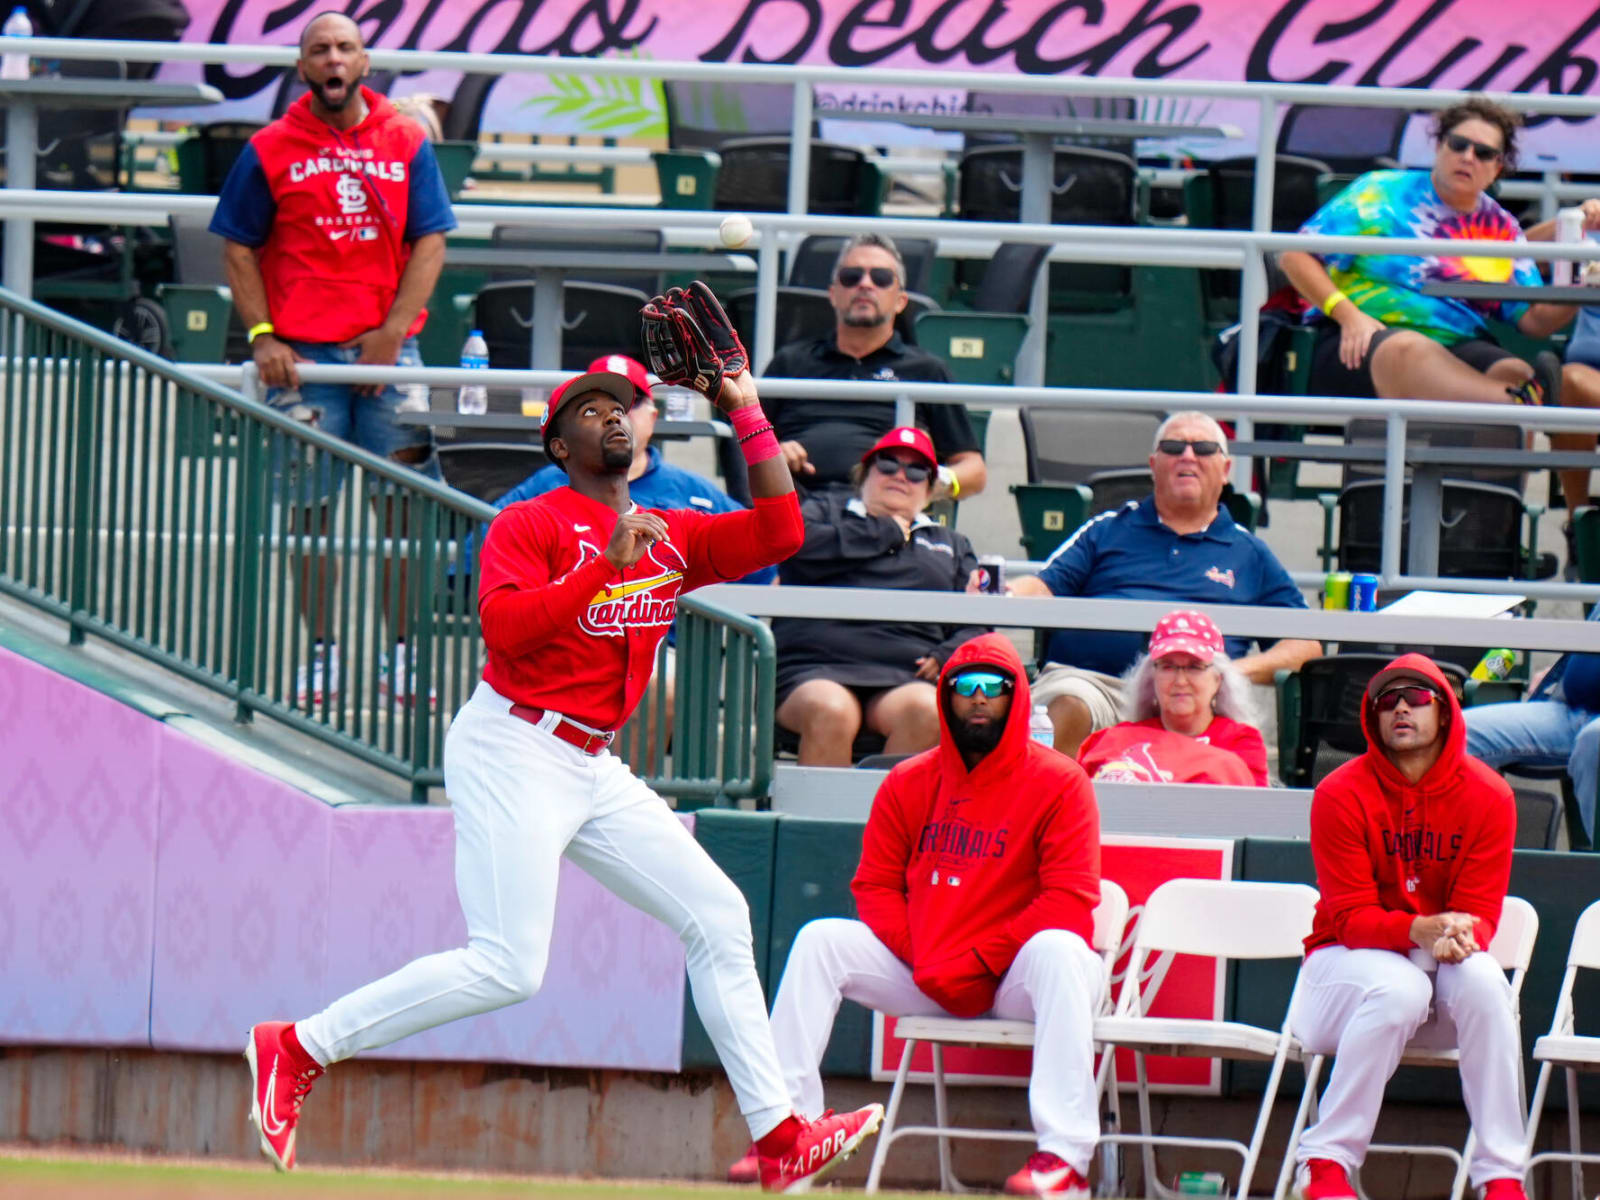 Burleson Makes MLB Debut With St. Louis Cardinals - East Carolina  University Athletics